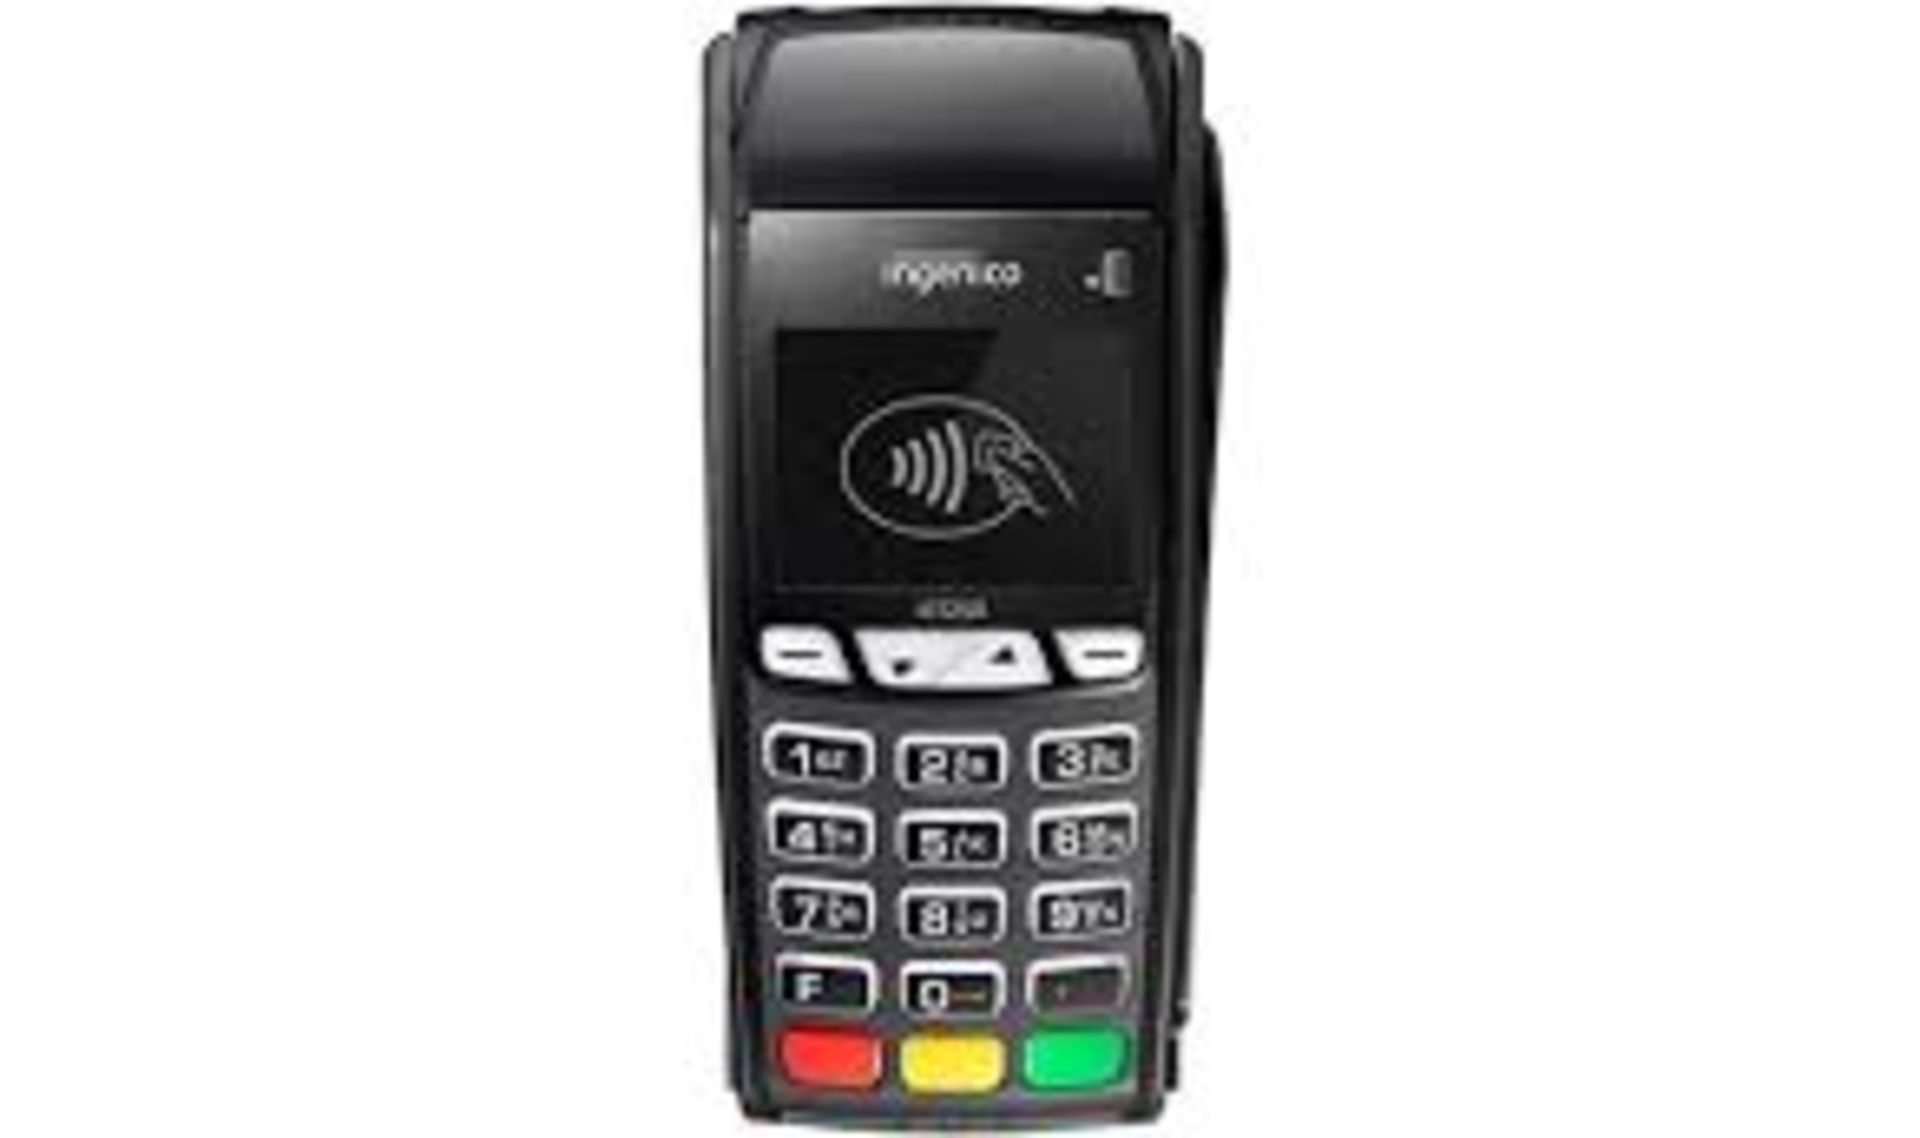 1 x Ingenico ICT250 Credit Card Terminal - Used Condition - location: Altrincham WA14 - Image 6 of 6